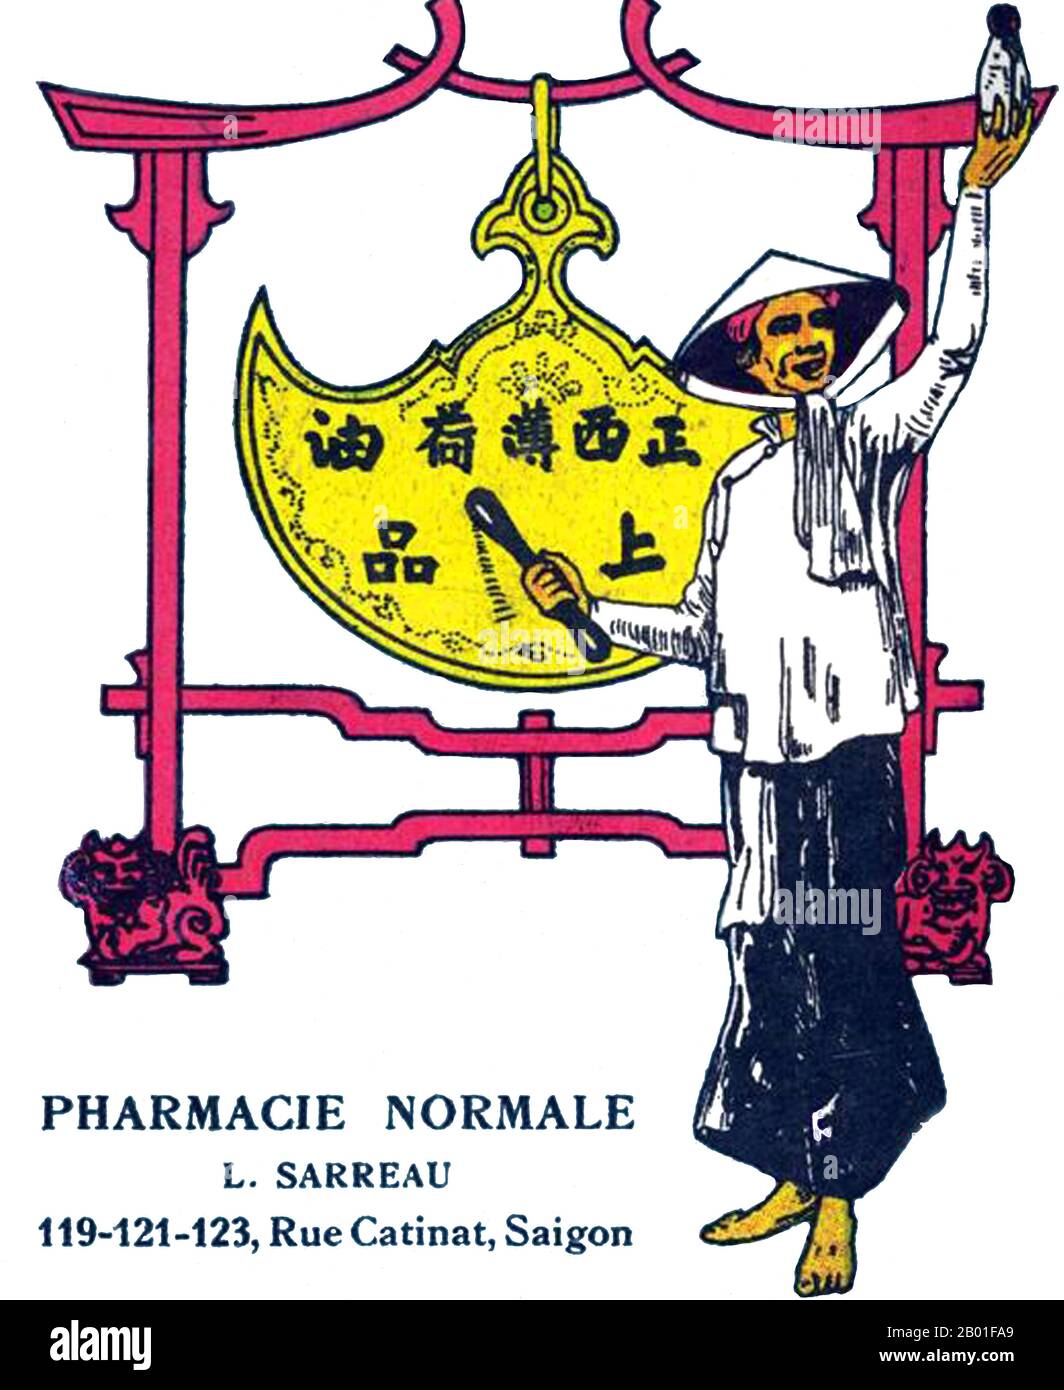 Vietnam: Pubblicità per L. Sarreau Pharmacy, Saigon c. 1940s. Pubblicità per L. Sarreau Pharmacie Normale, Rue Catinat, Saigon, dall'epoca coloniale francese in Indochina. Foto Stock